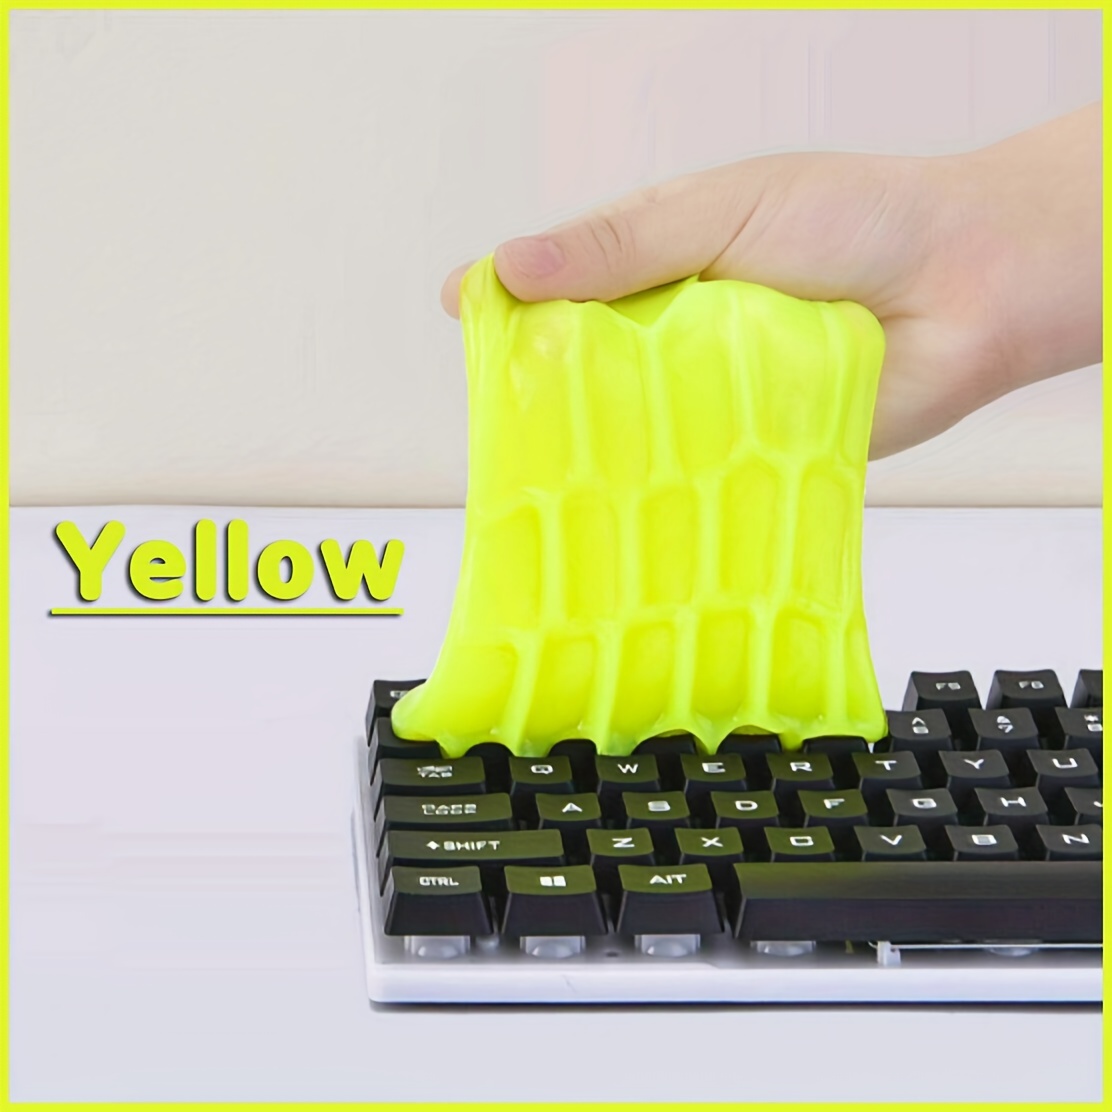 Super Clean Keyboard Cleaning Gel - In Use 